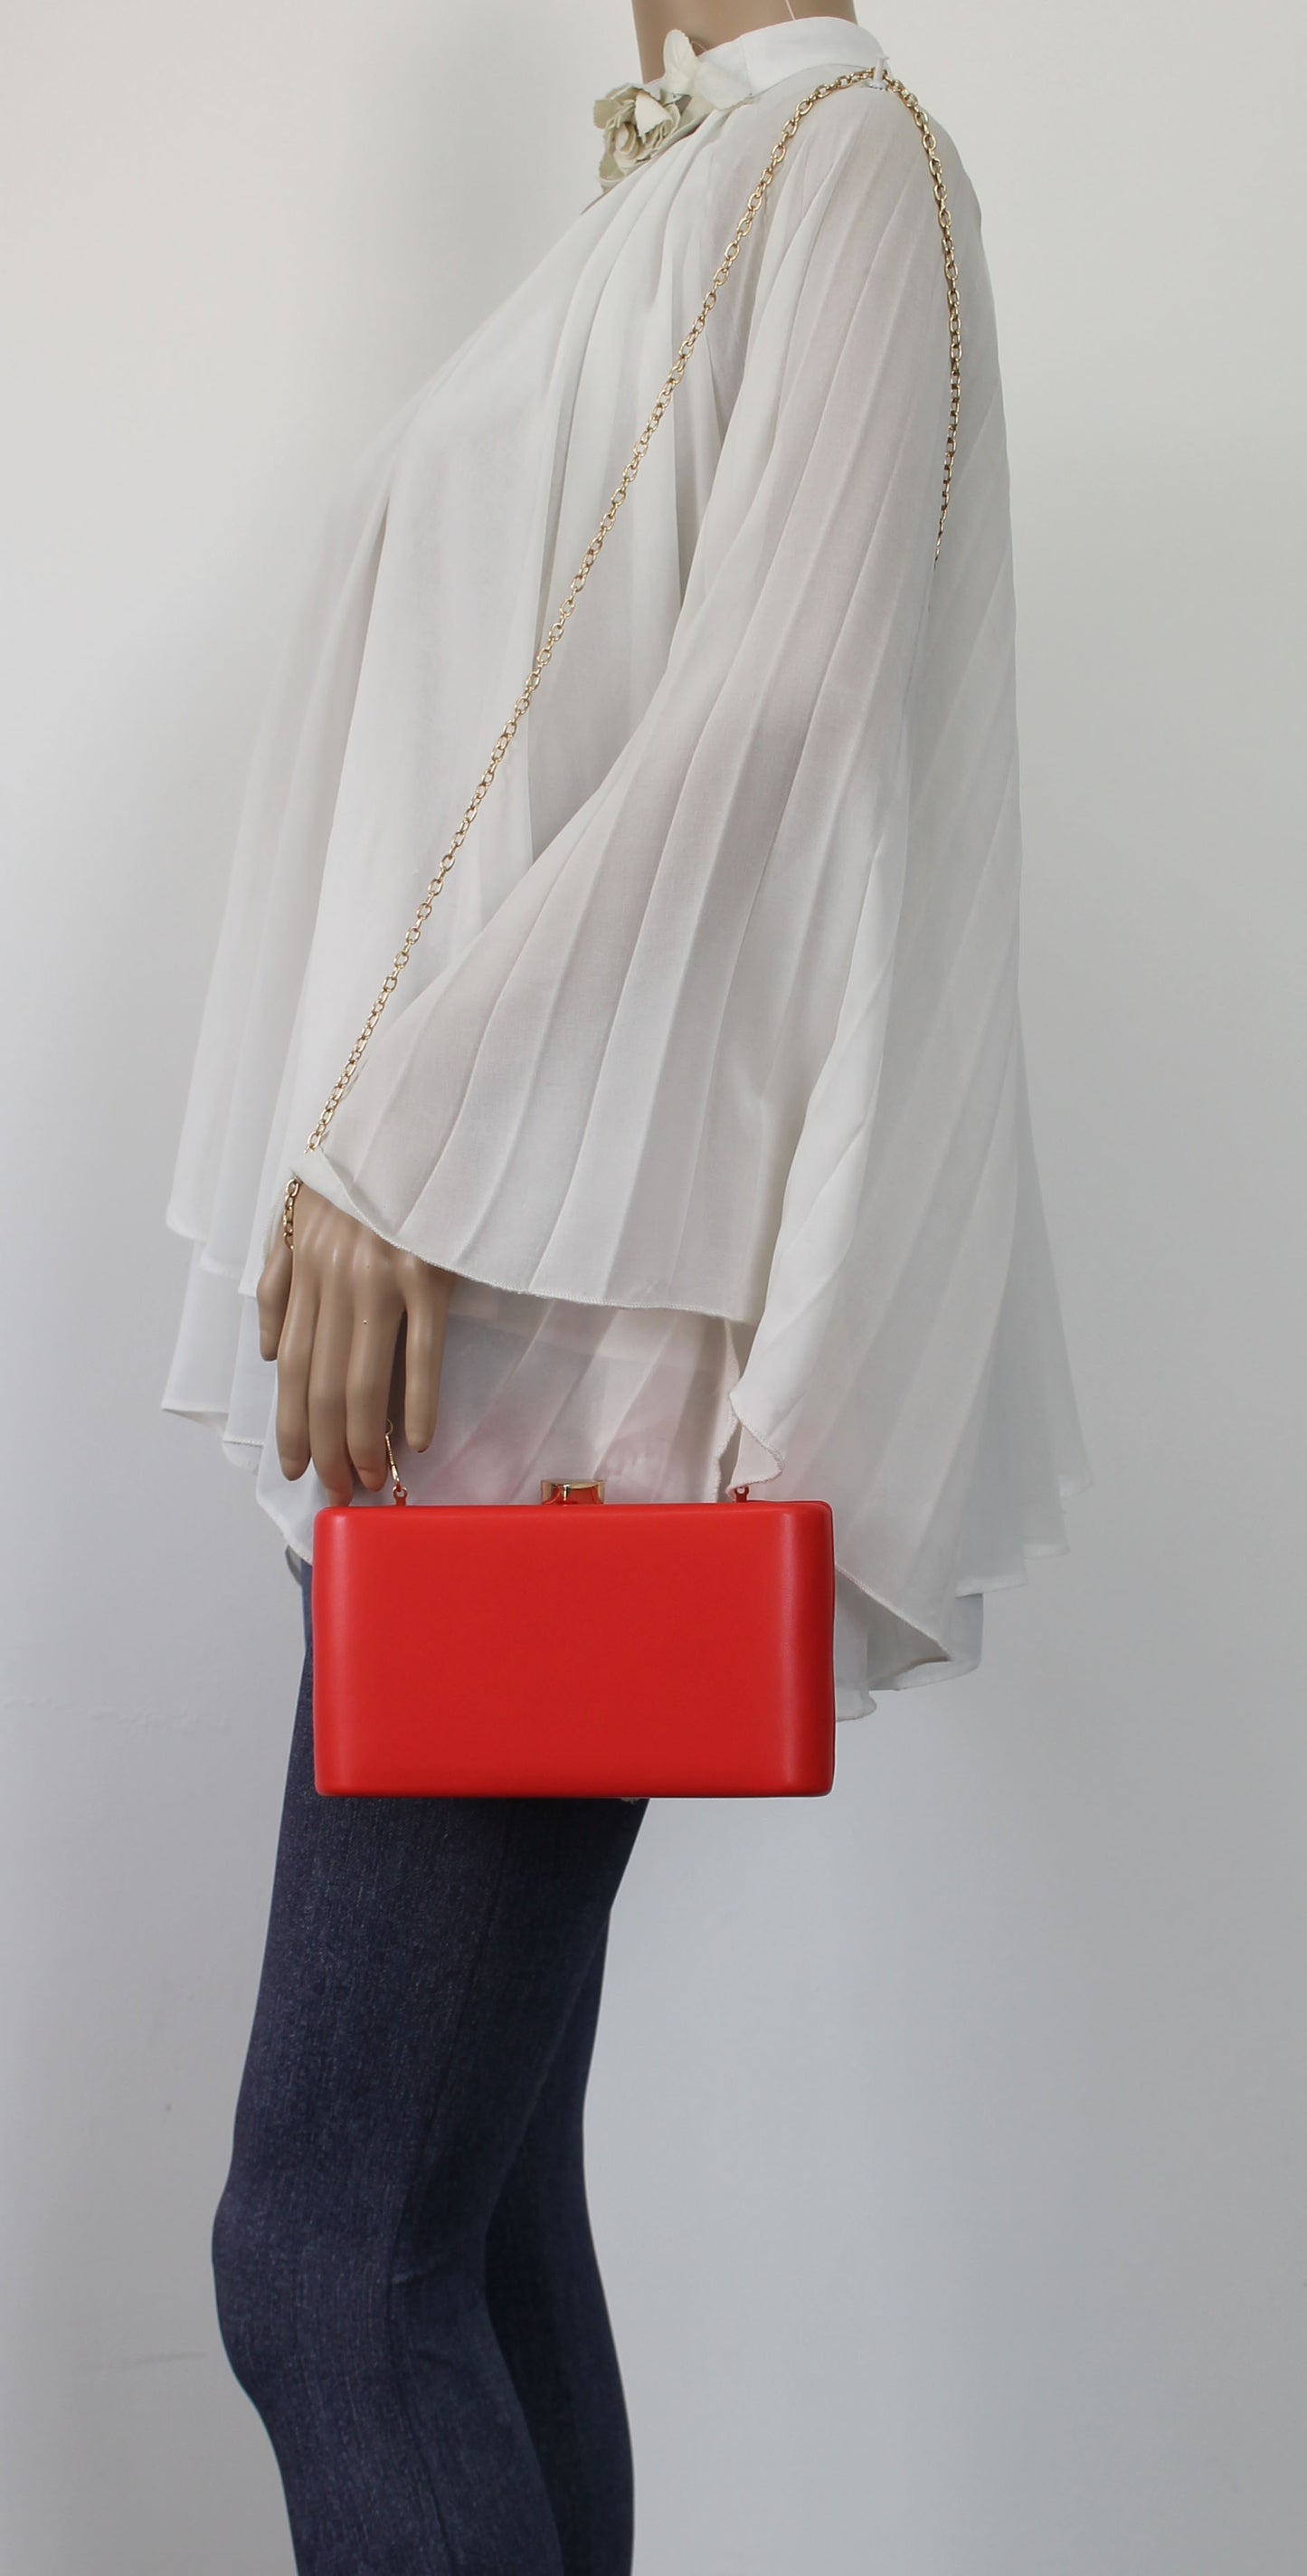 SWANKYSWANS Ruth Clutch Bag Red Cute Cheap Clutch Bag For Weddings School and Work